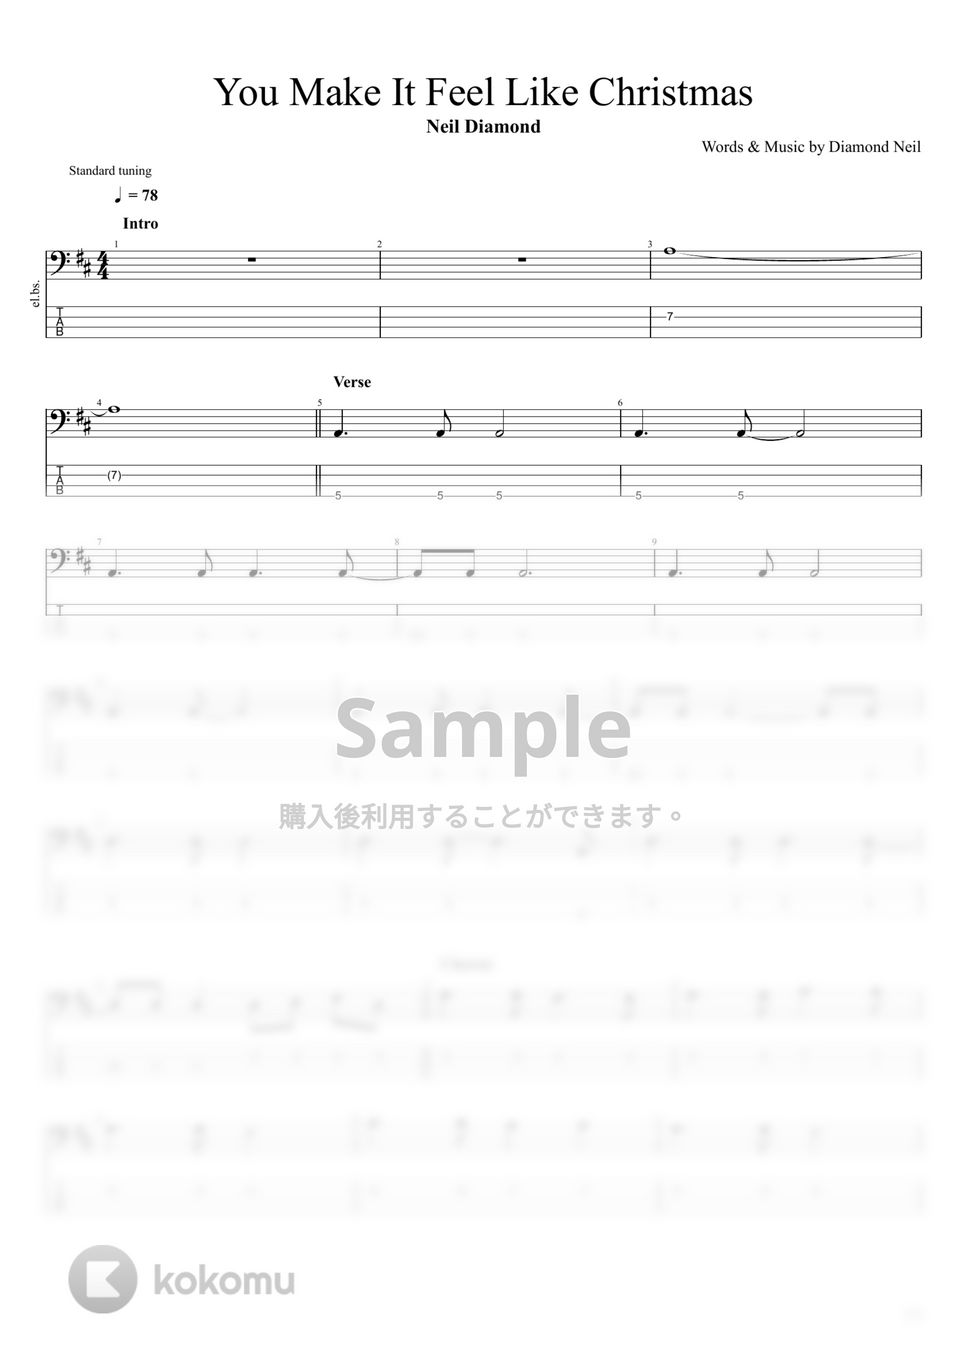 Neil Diamond - You Make It Feel Like Christmas by まっきん